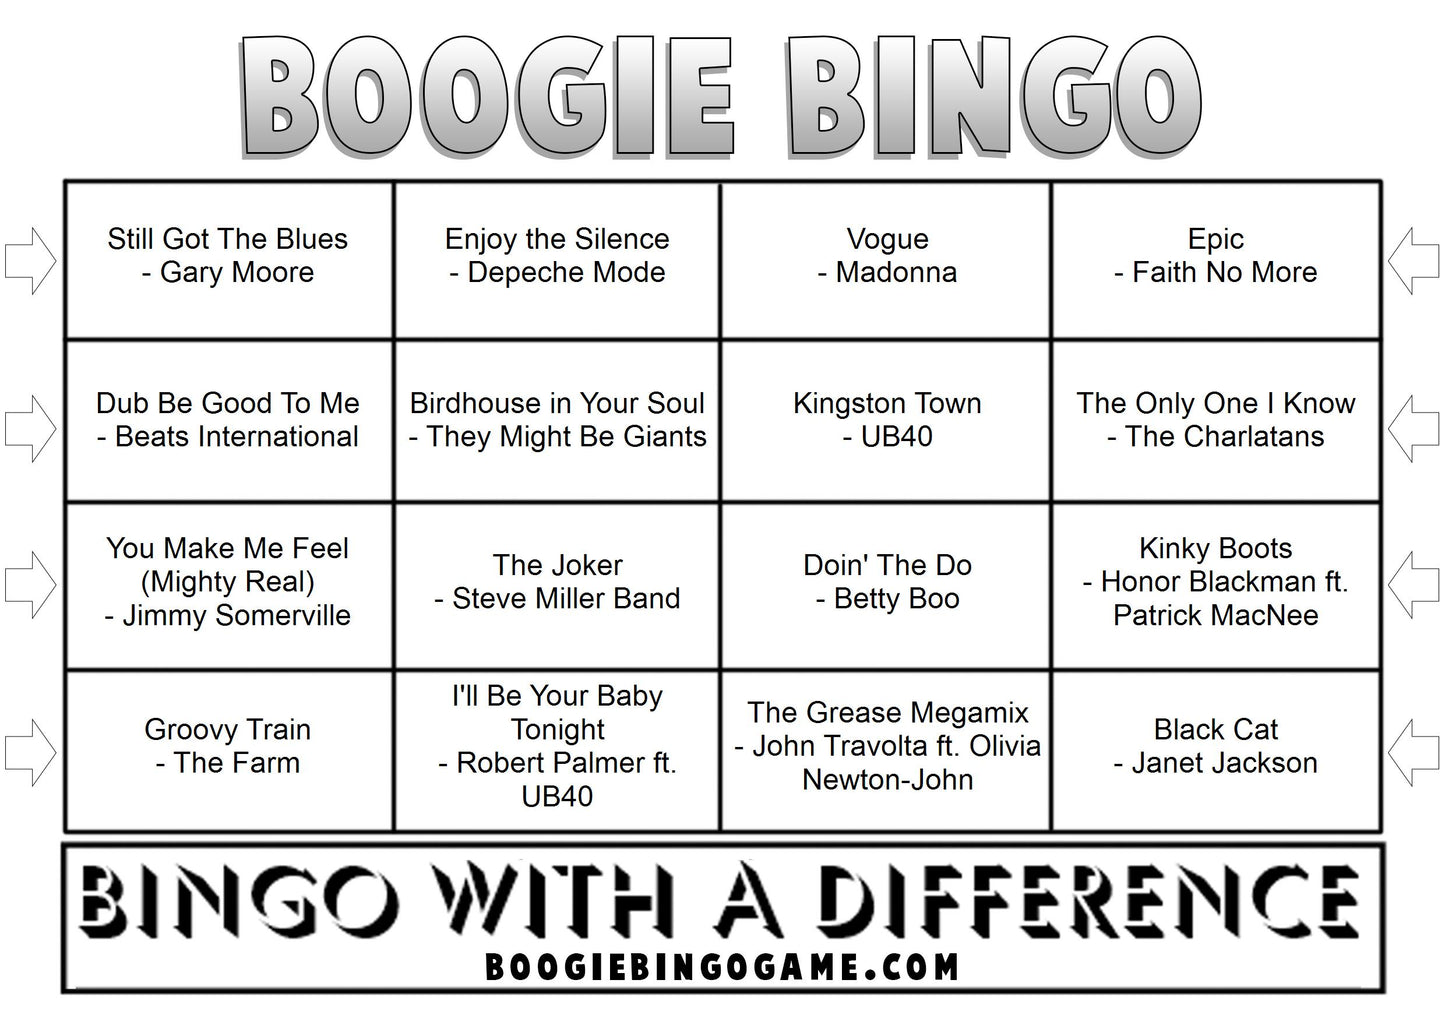 Game 87 | Hits of 1990 | Boogie Bingo | Printable Music Bingo Tickets